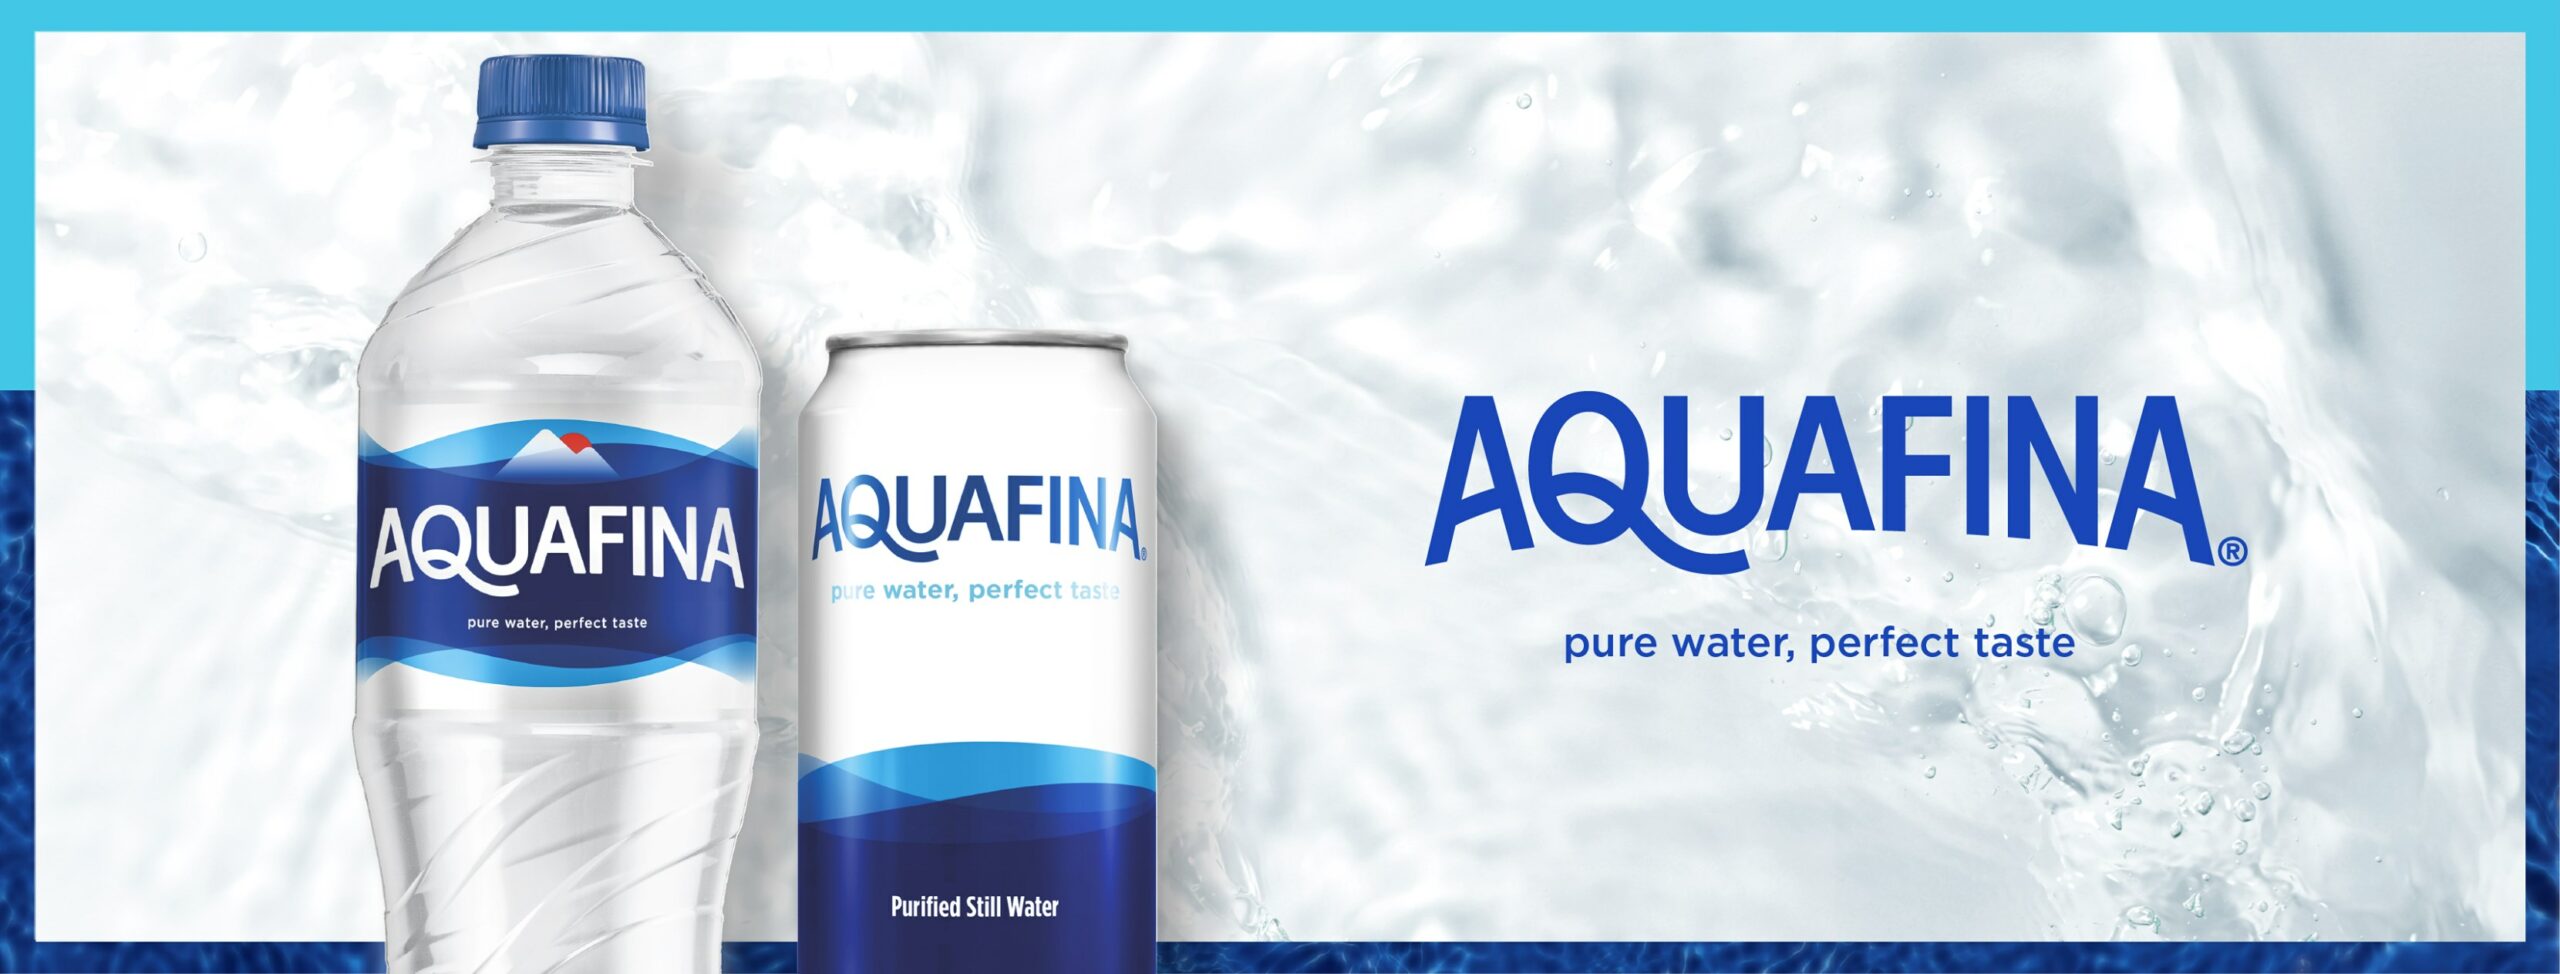 giới thiệu sản phẩm aquafina